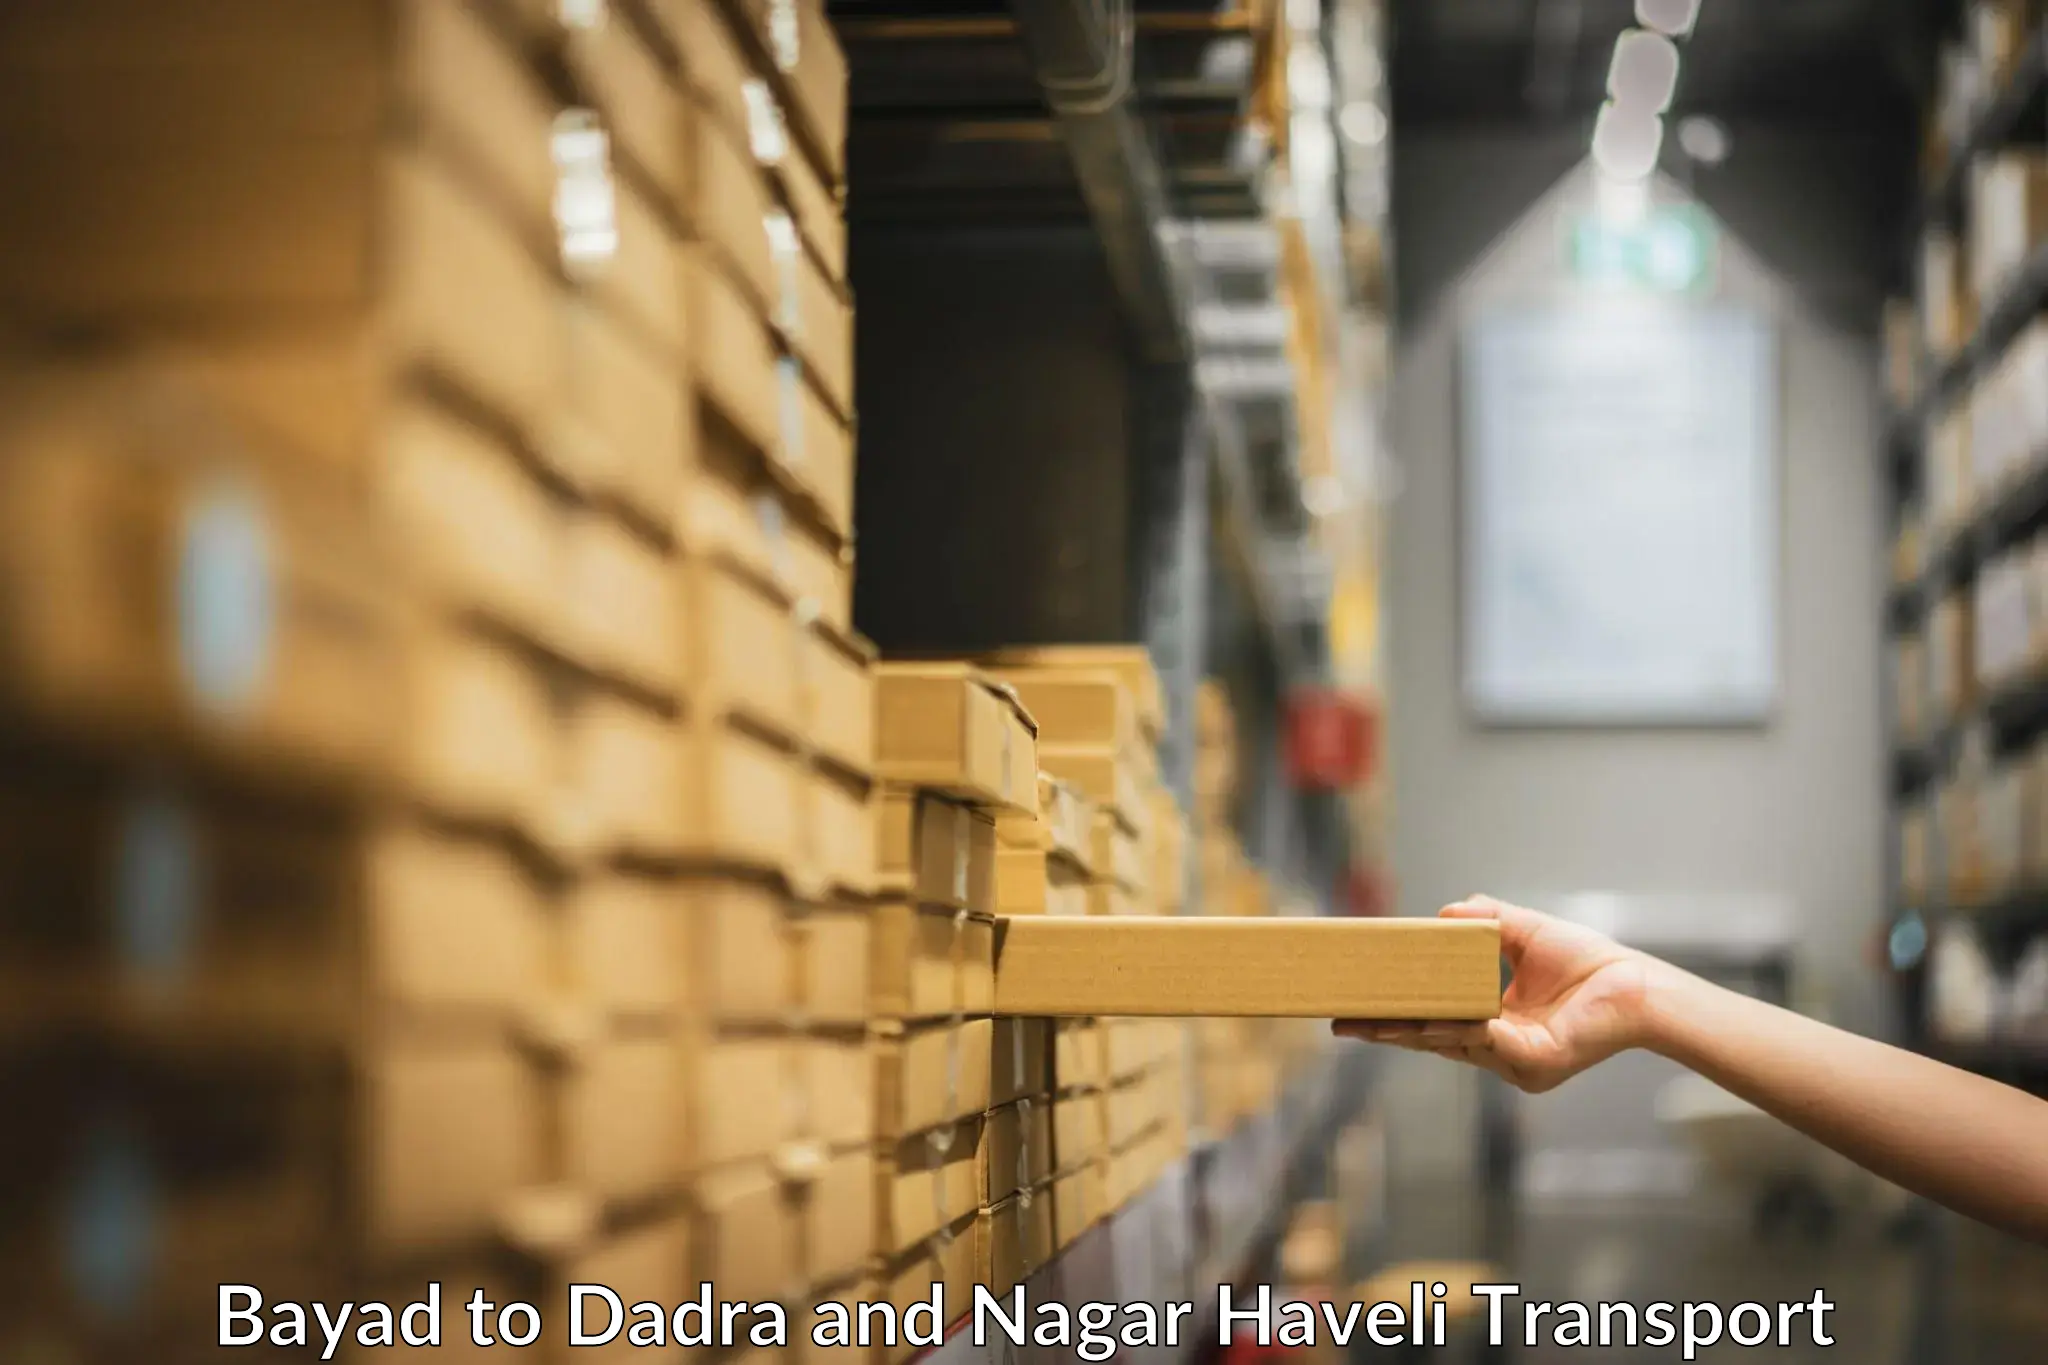 Furniture transport service Bayad to Dadra and Nagar Haveli